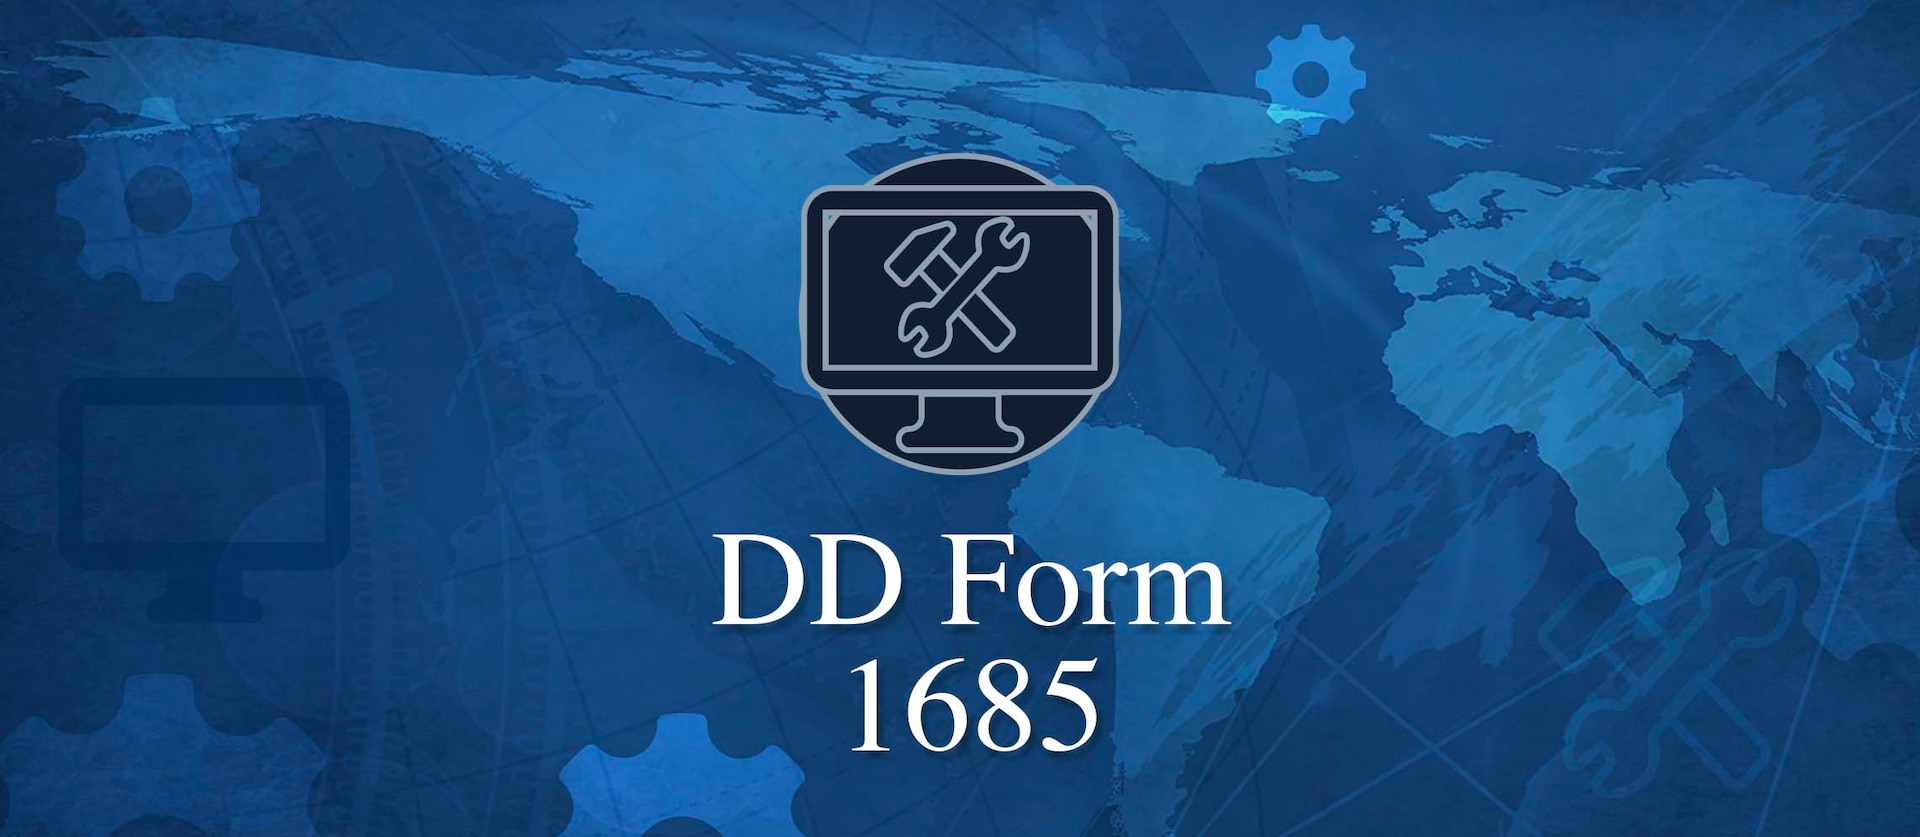 DD Form 1685 application image